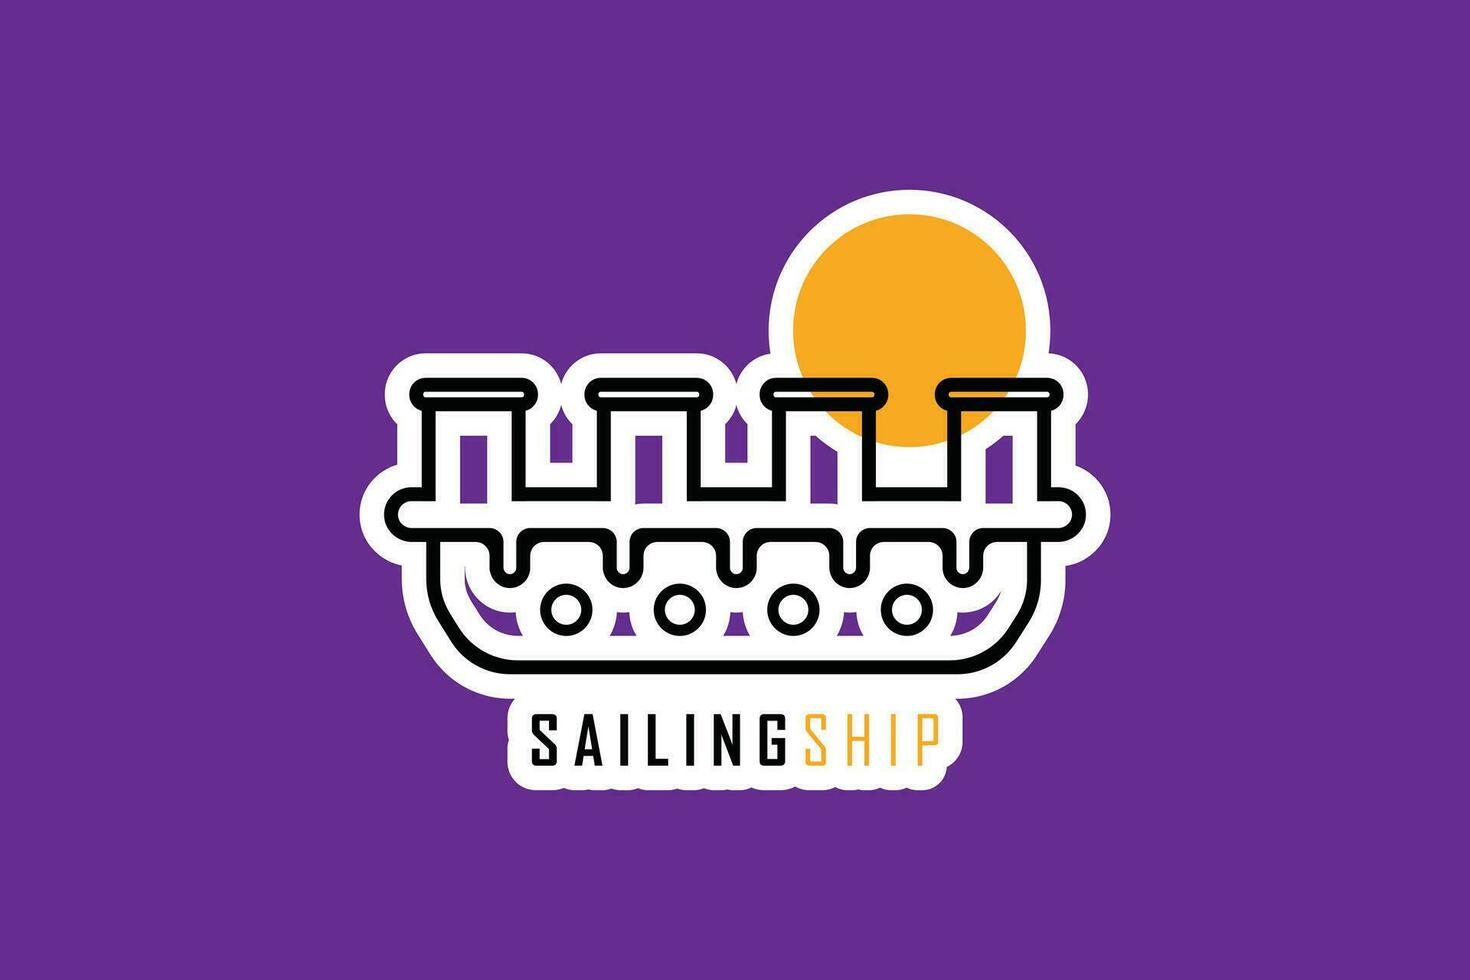 Sailing Boat Sticker logo design. Sea transportation objects icon concept. Ocean transportation ship yacht for traveling sticker vector design.